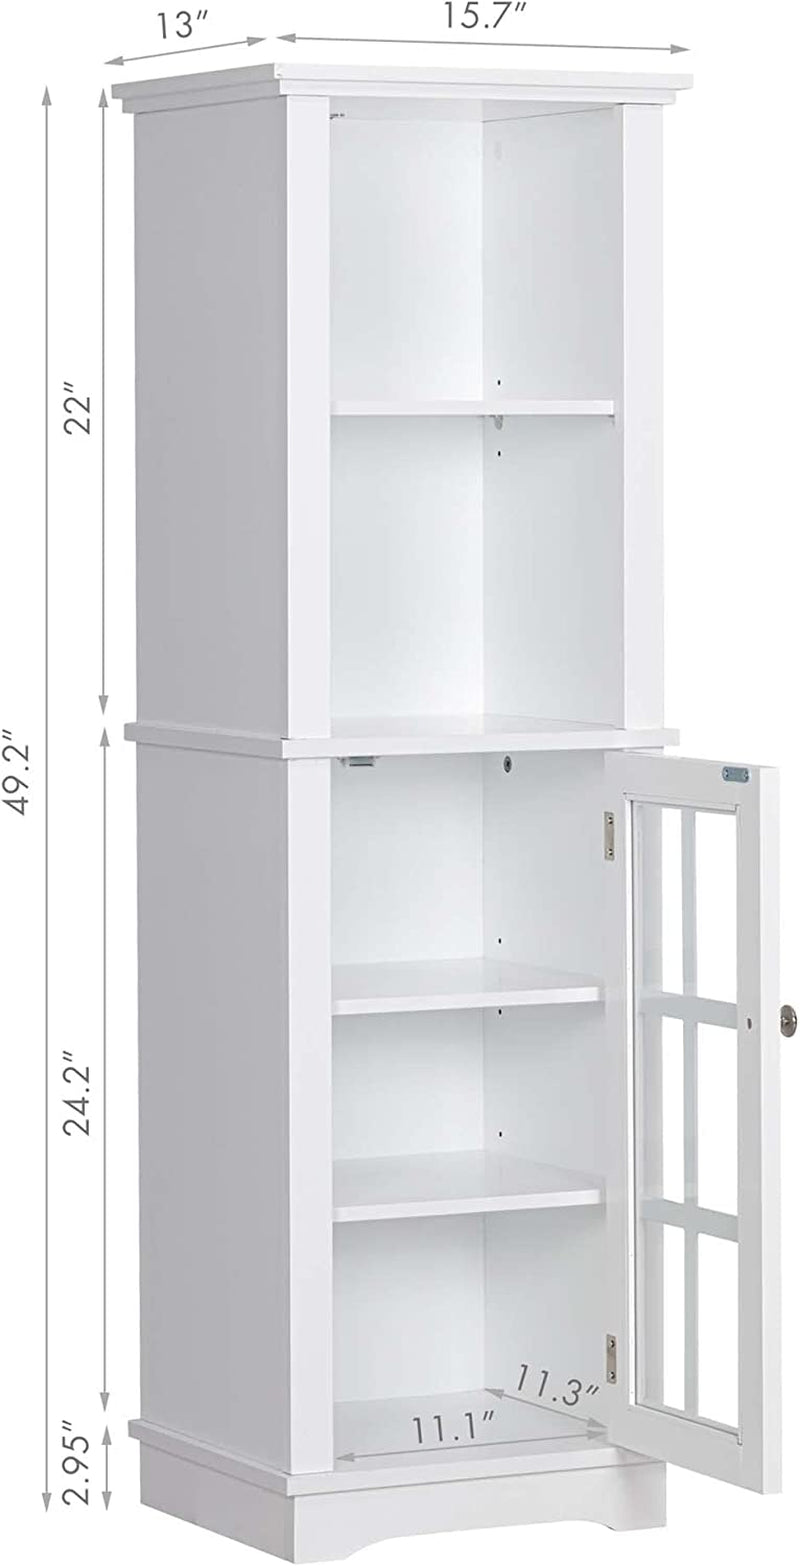 Spirich Home Tall Narrow Storage Cabinet, Bathroom Floor Slim Cabinet with Windowpanel Glass Door, Freestanding Linen Tower, White